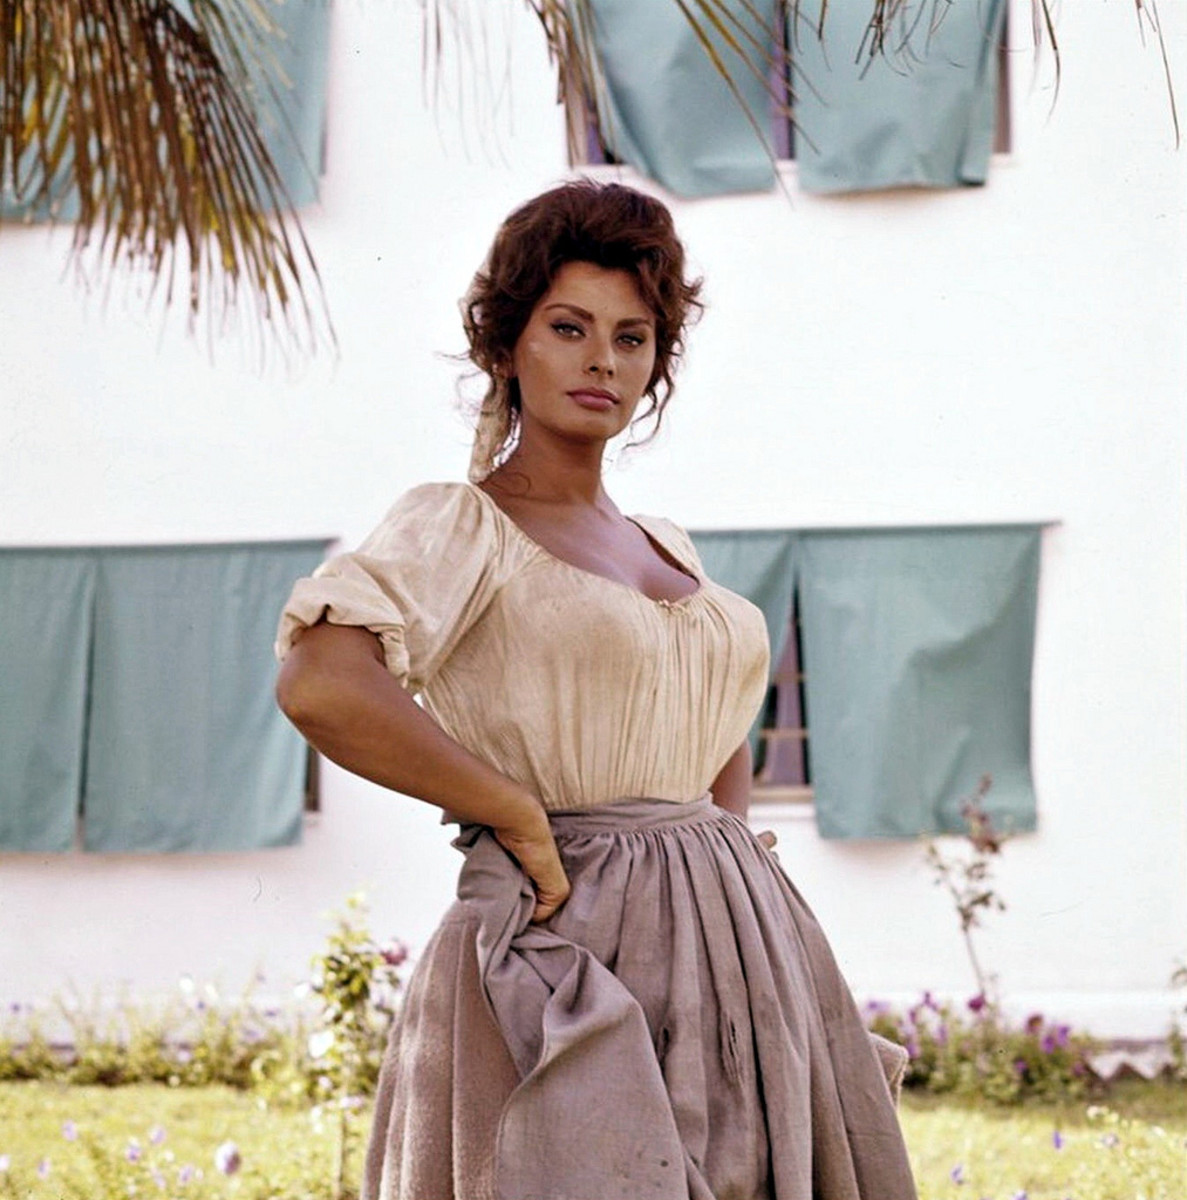 Vivacious Actress Sophia Loren at 72 Is Still a Beautiful Woman